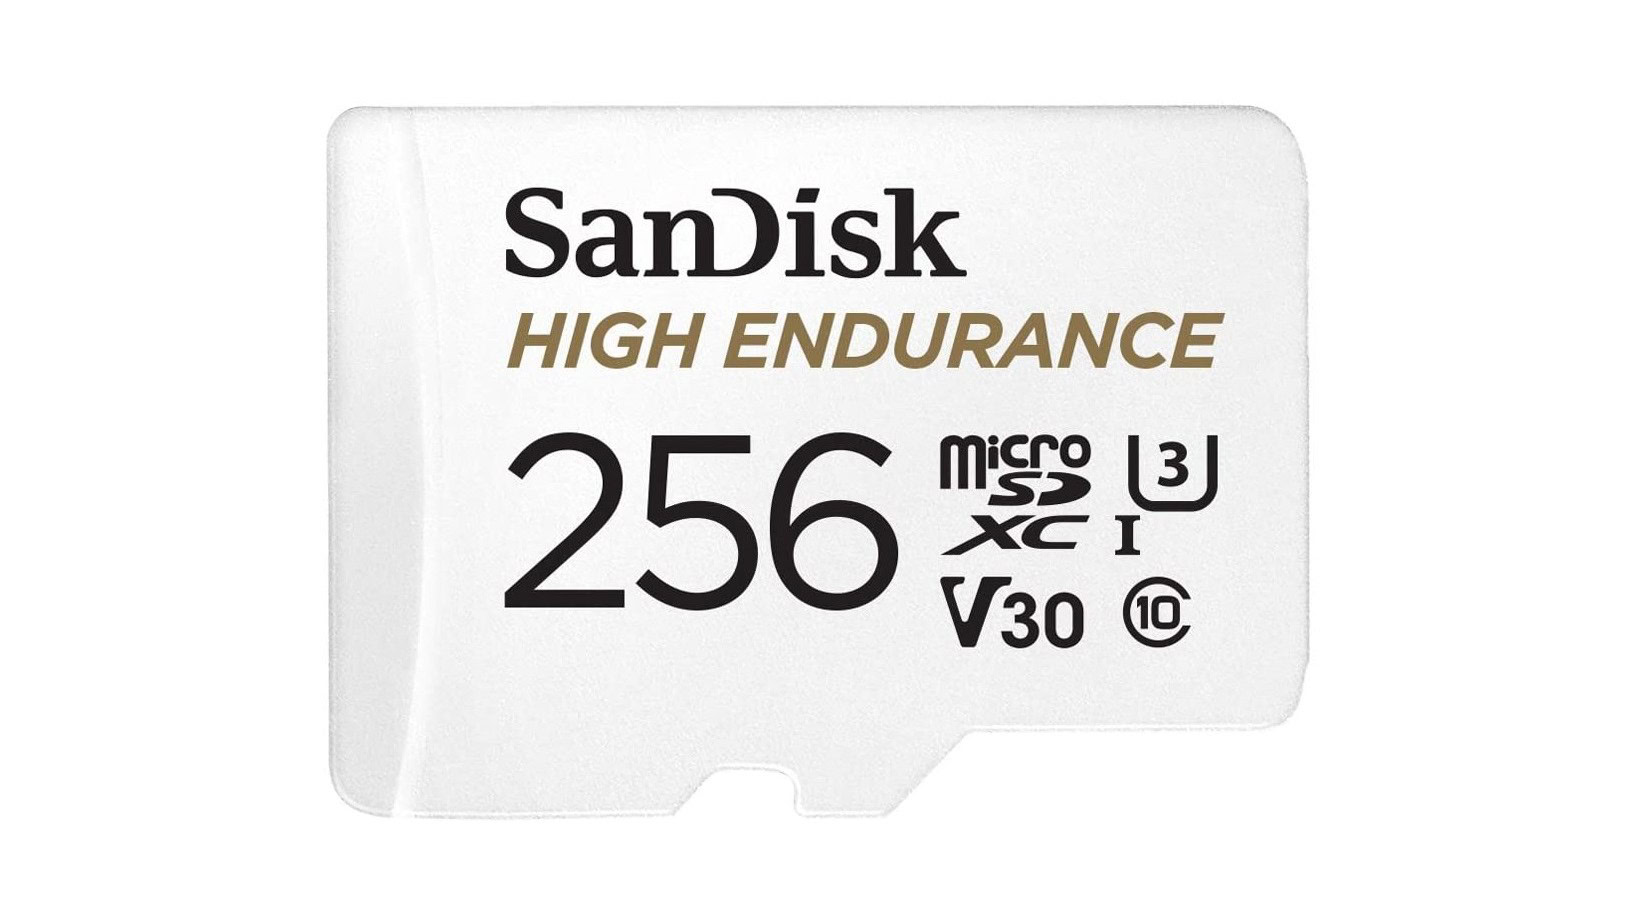 Sandisk High Endurance microSD card